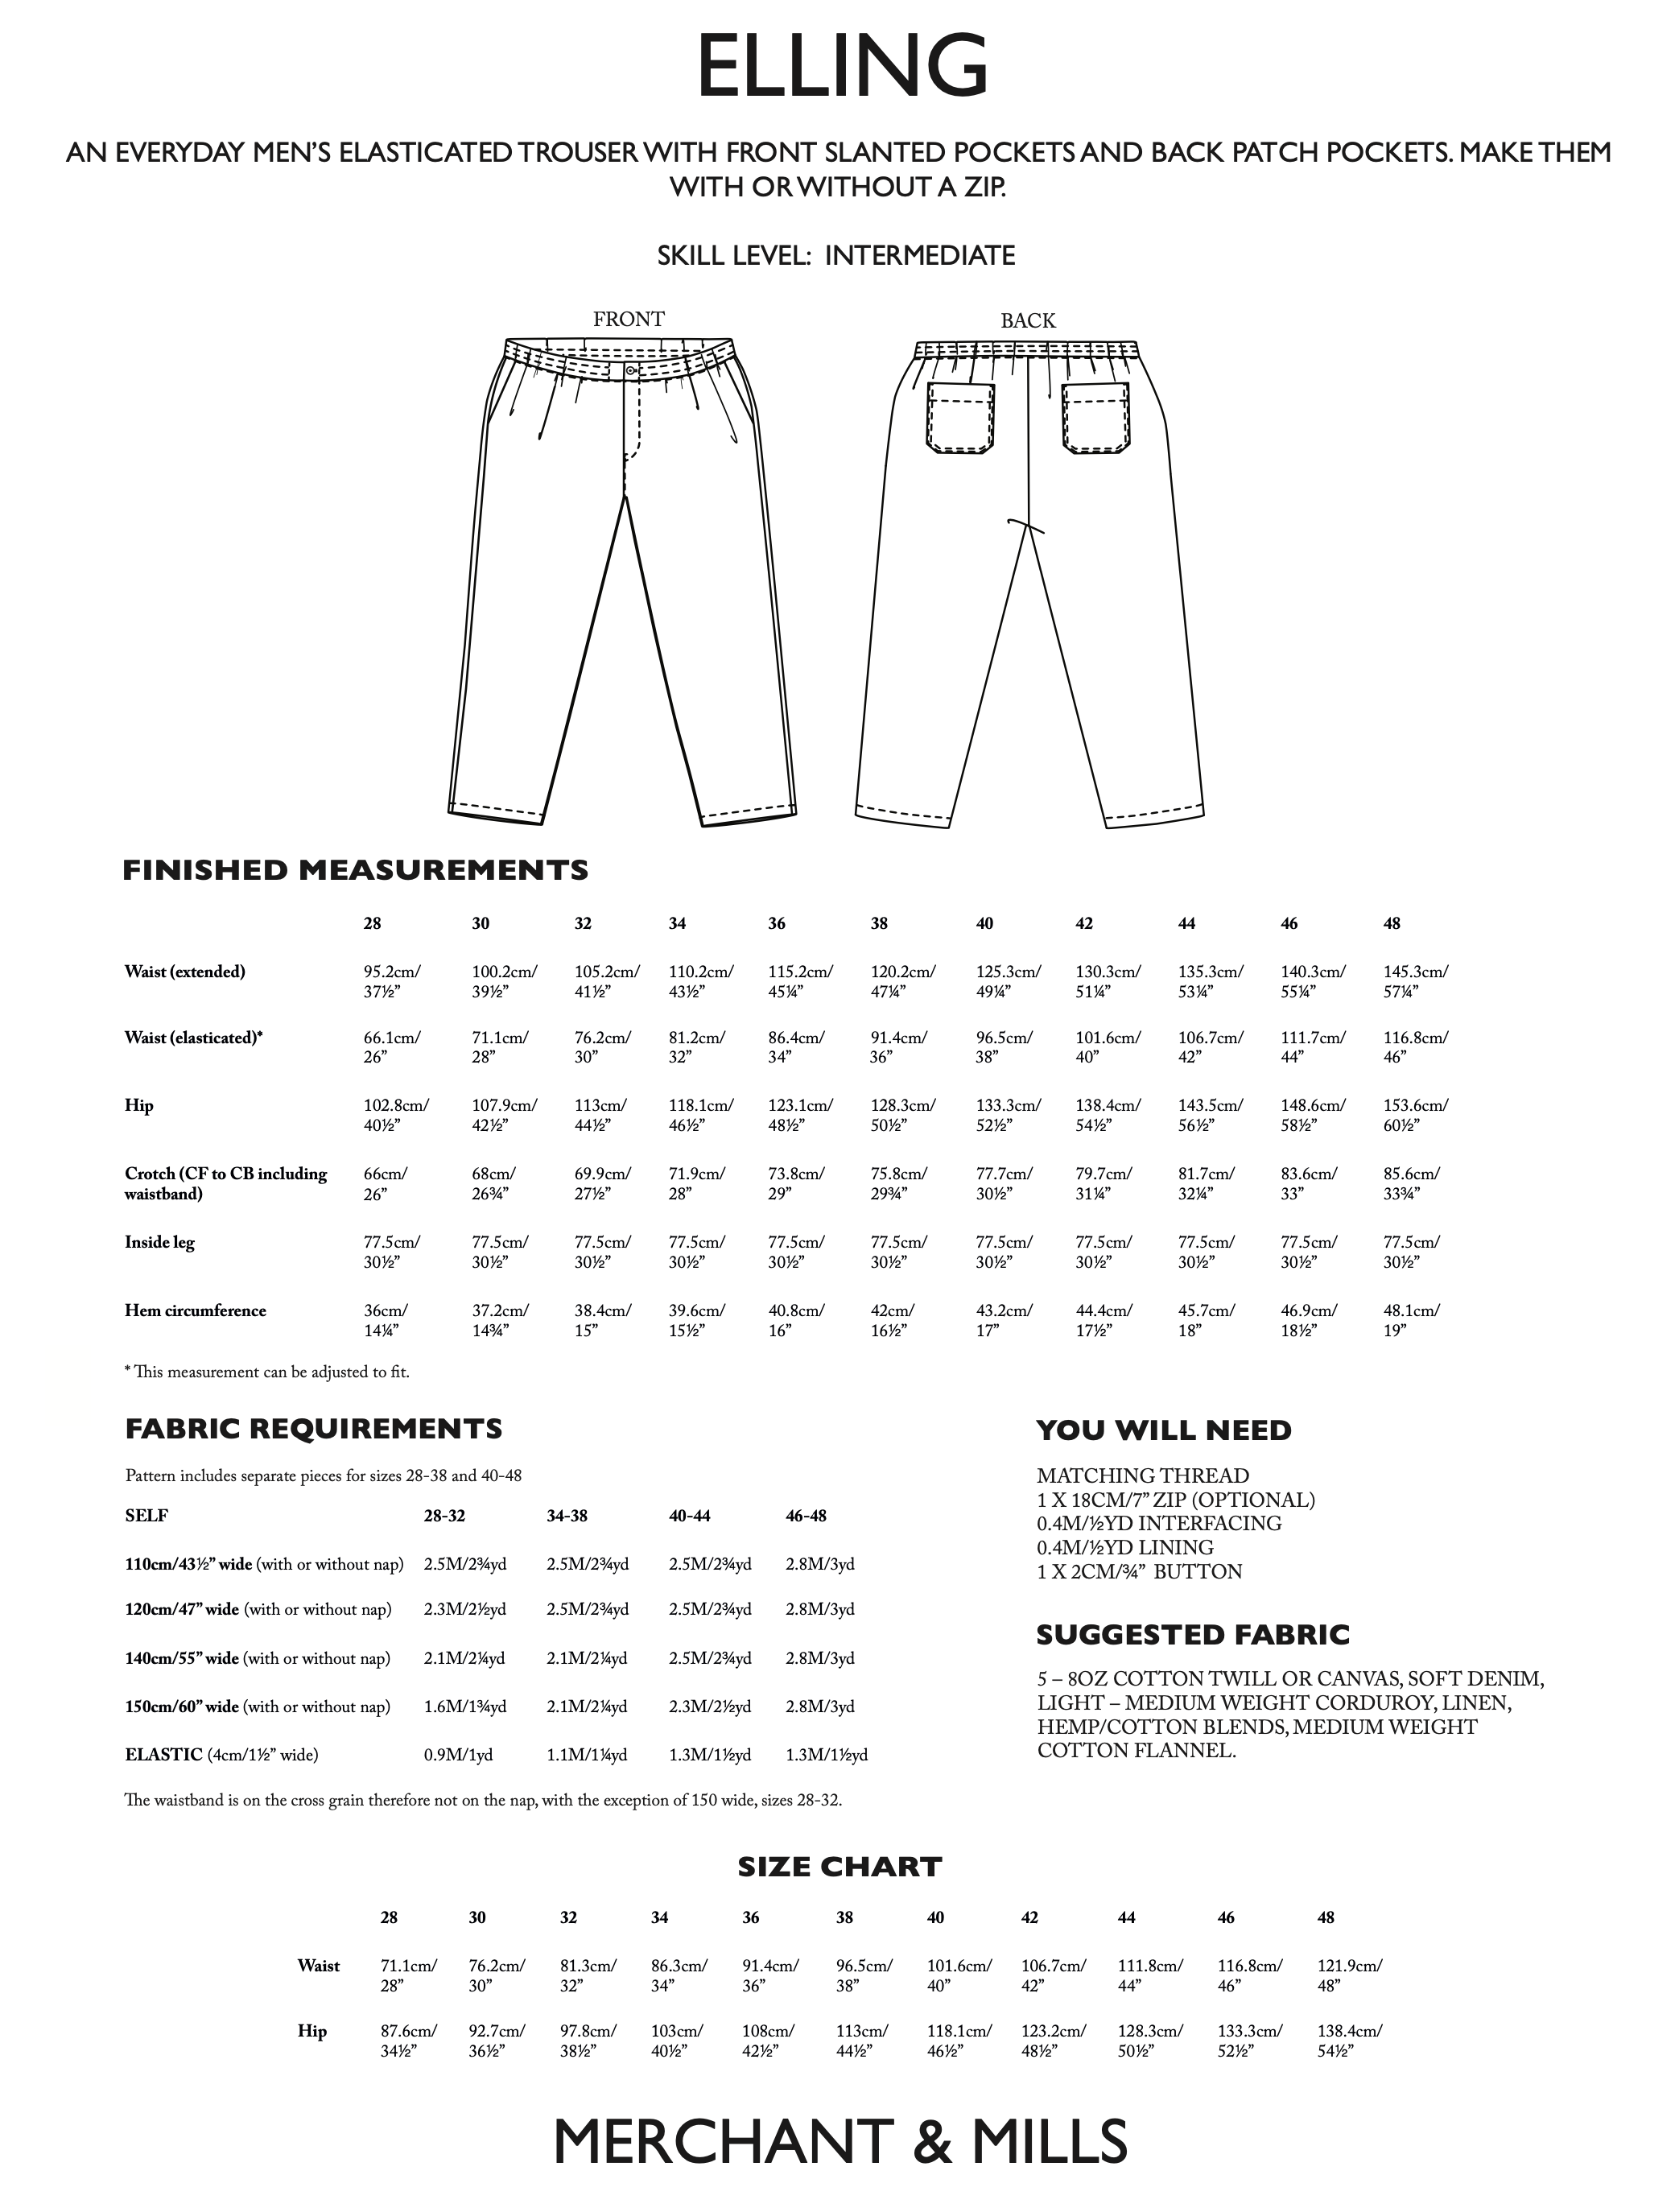 Merchant & Mills Men's Elling Trousers - The Fold Line